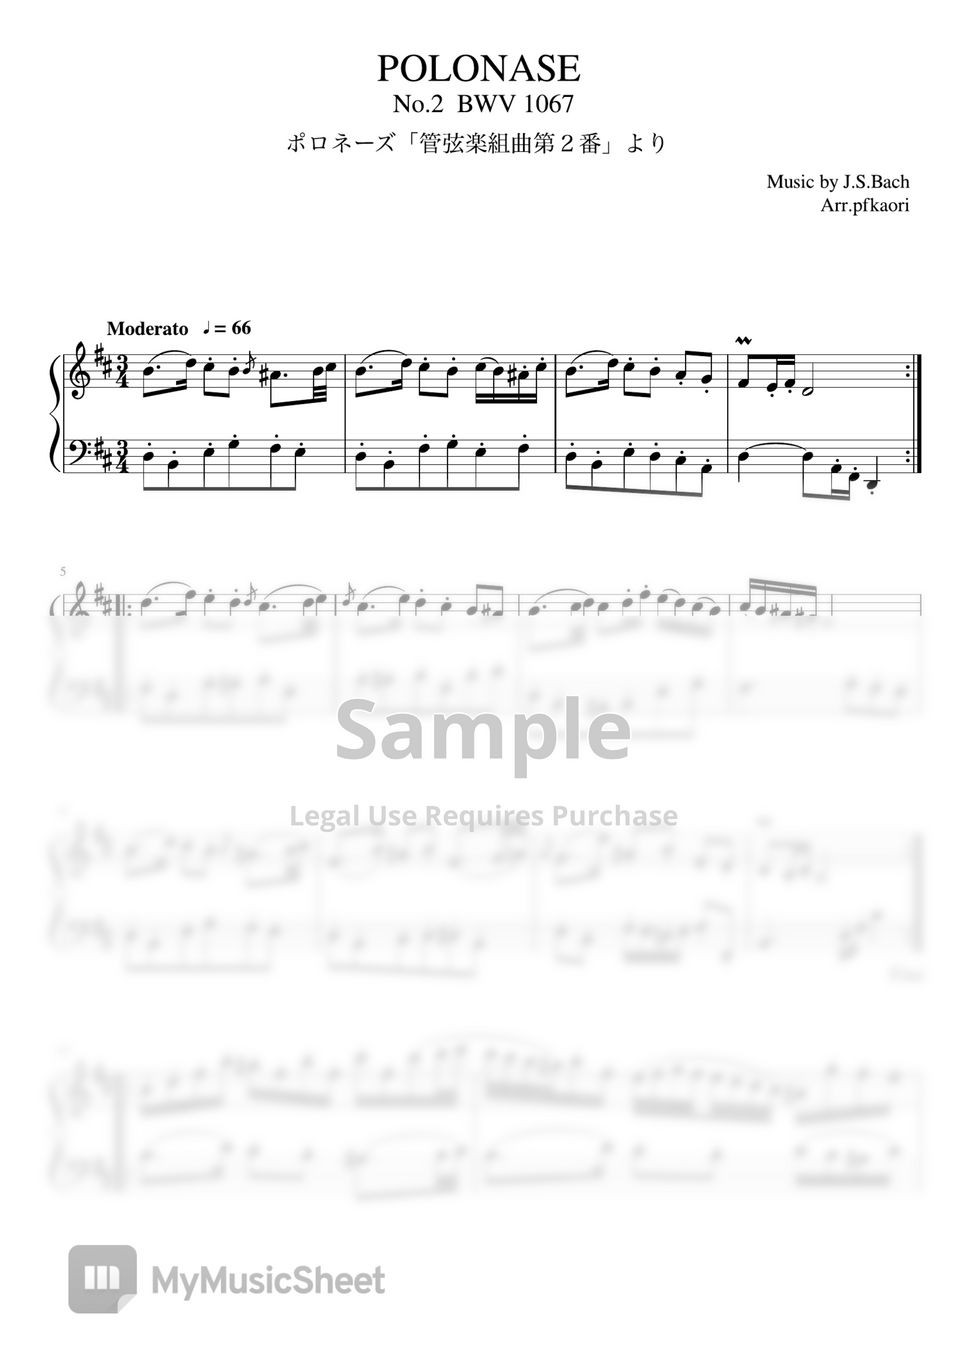 J.s.Bach - Orchestra suite Ⅱ BWV1067 "Polonase" (Bm pianosolo Beginner to Intermediate) by pfkaori